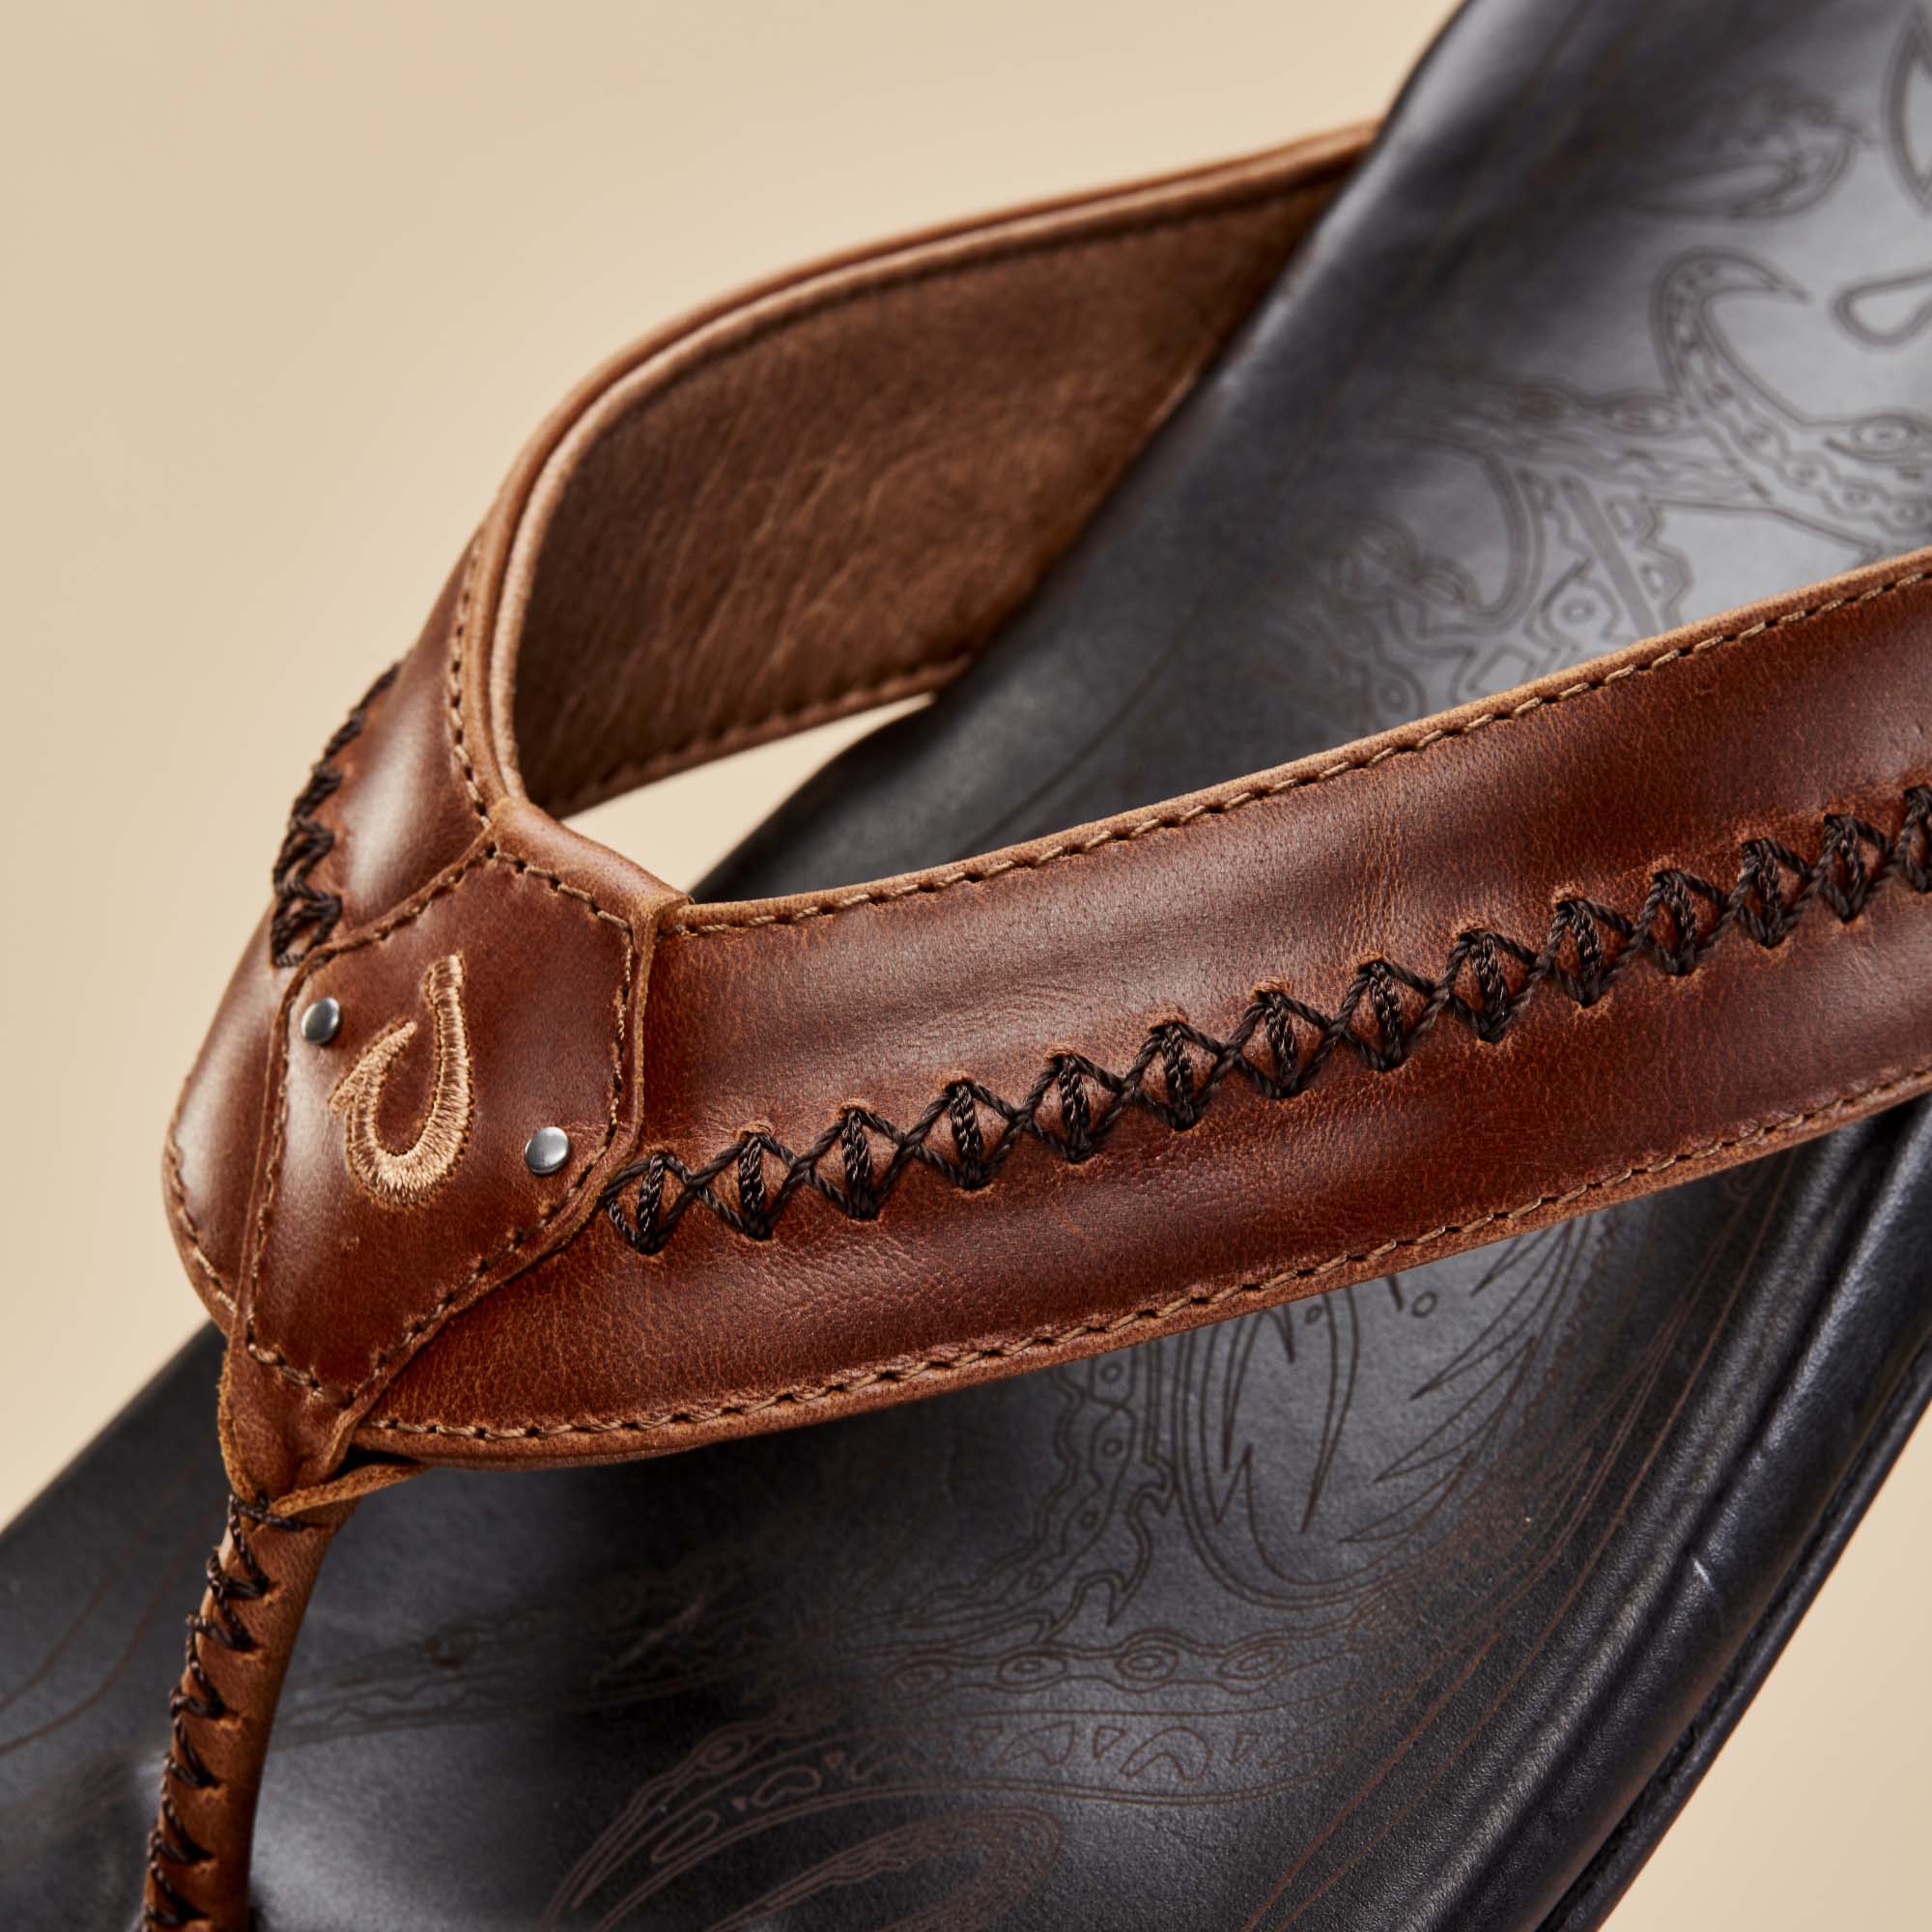 Mea Ola Men's Leather Sandals - Tan / Dark Java | OluKai